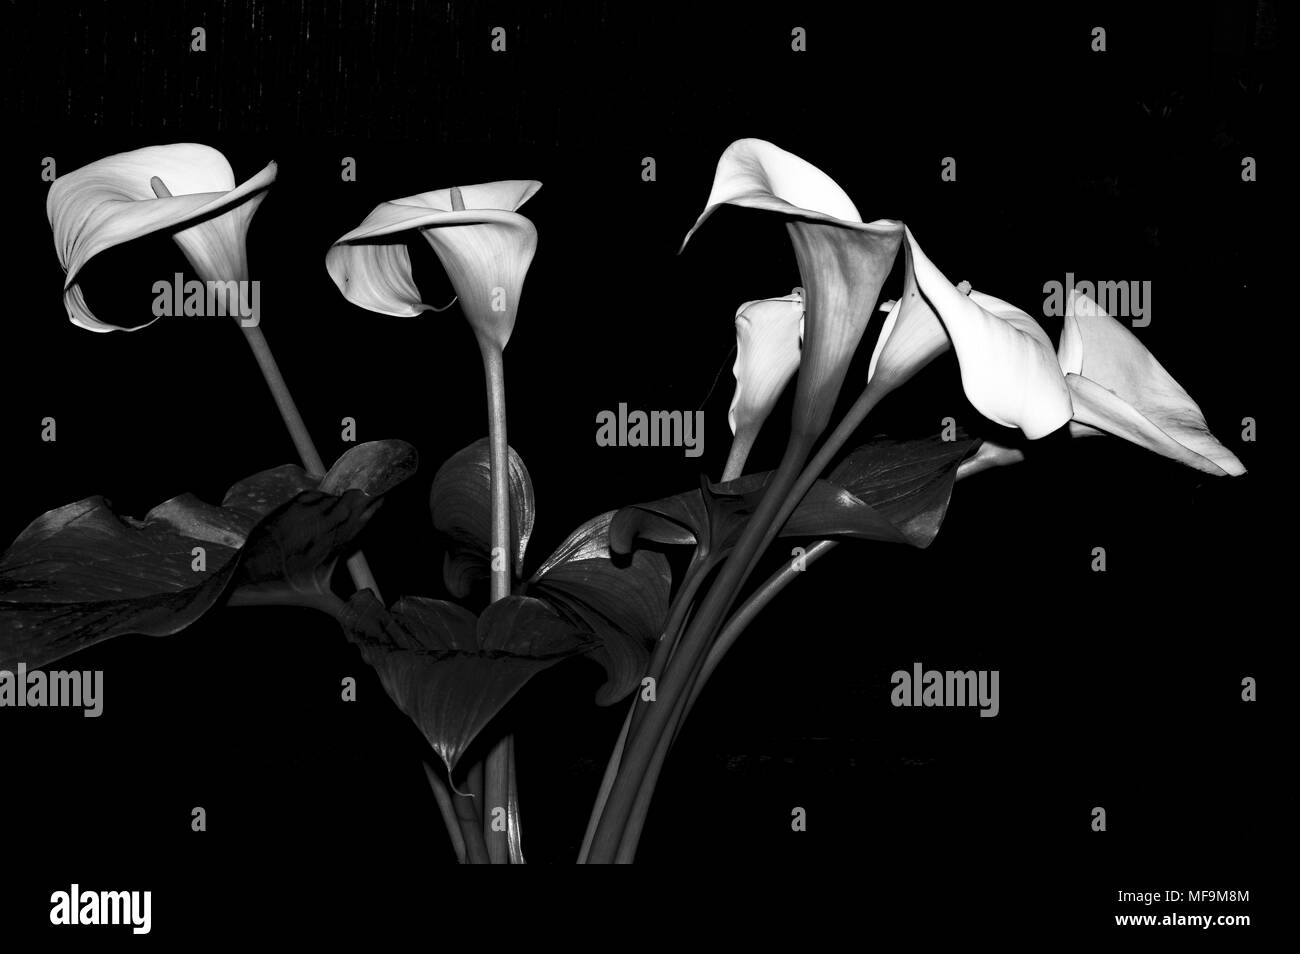 Arum lily in bianco e nero di close-up Foto Stock